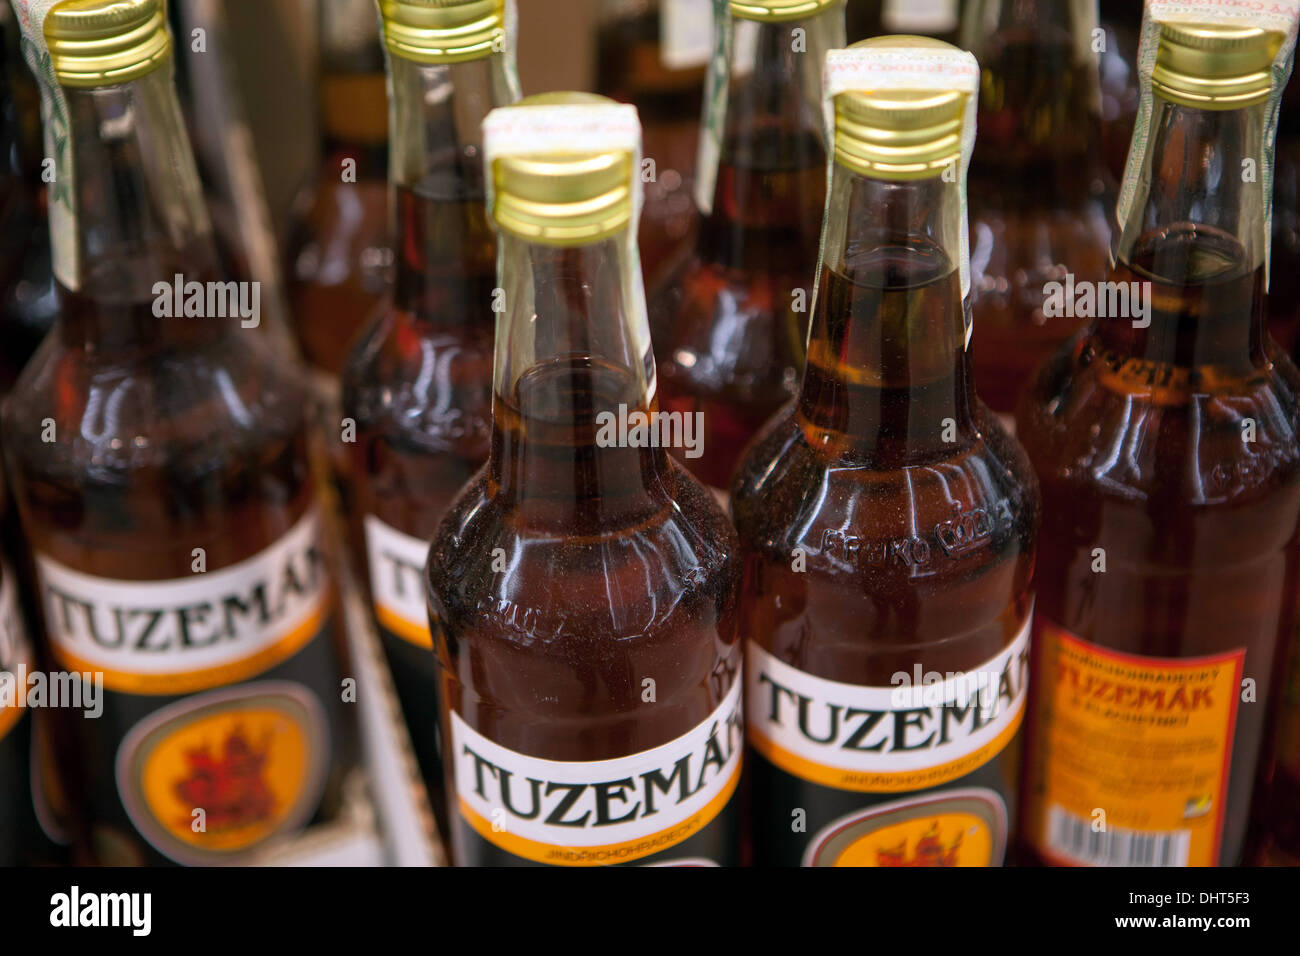 Tuzemak is Czech-distilled alcoholic liqueur supermarket shelf, bottles Stock Photo